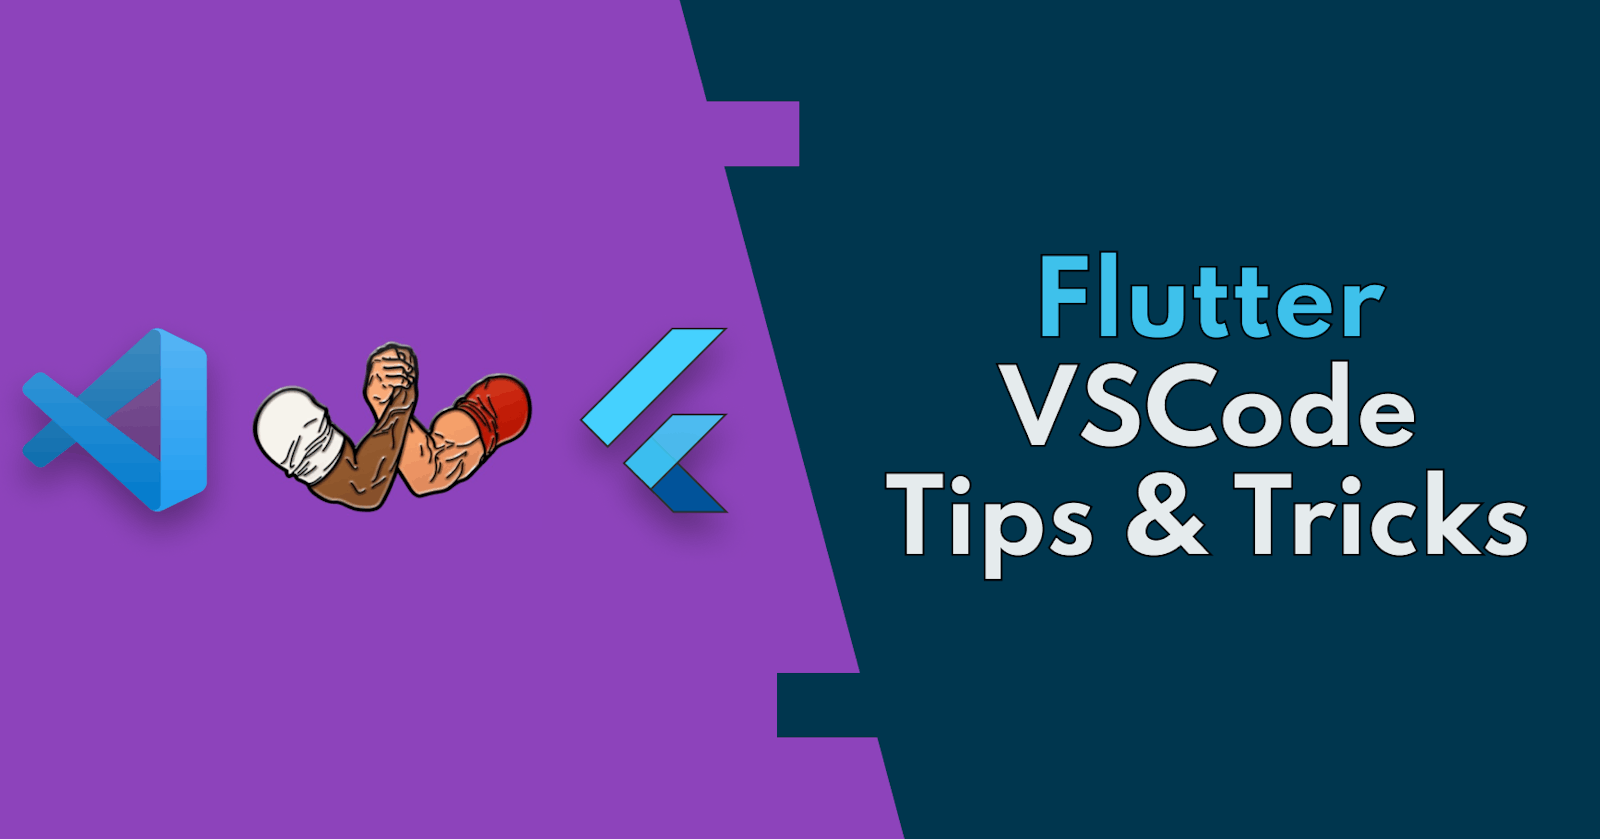 VSCode Tips & Tricks for Flutter Projects